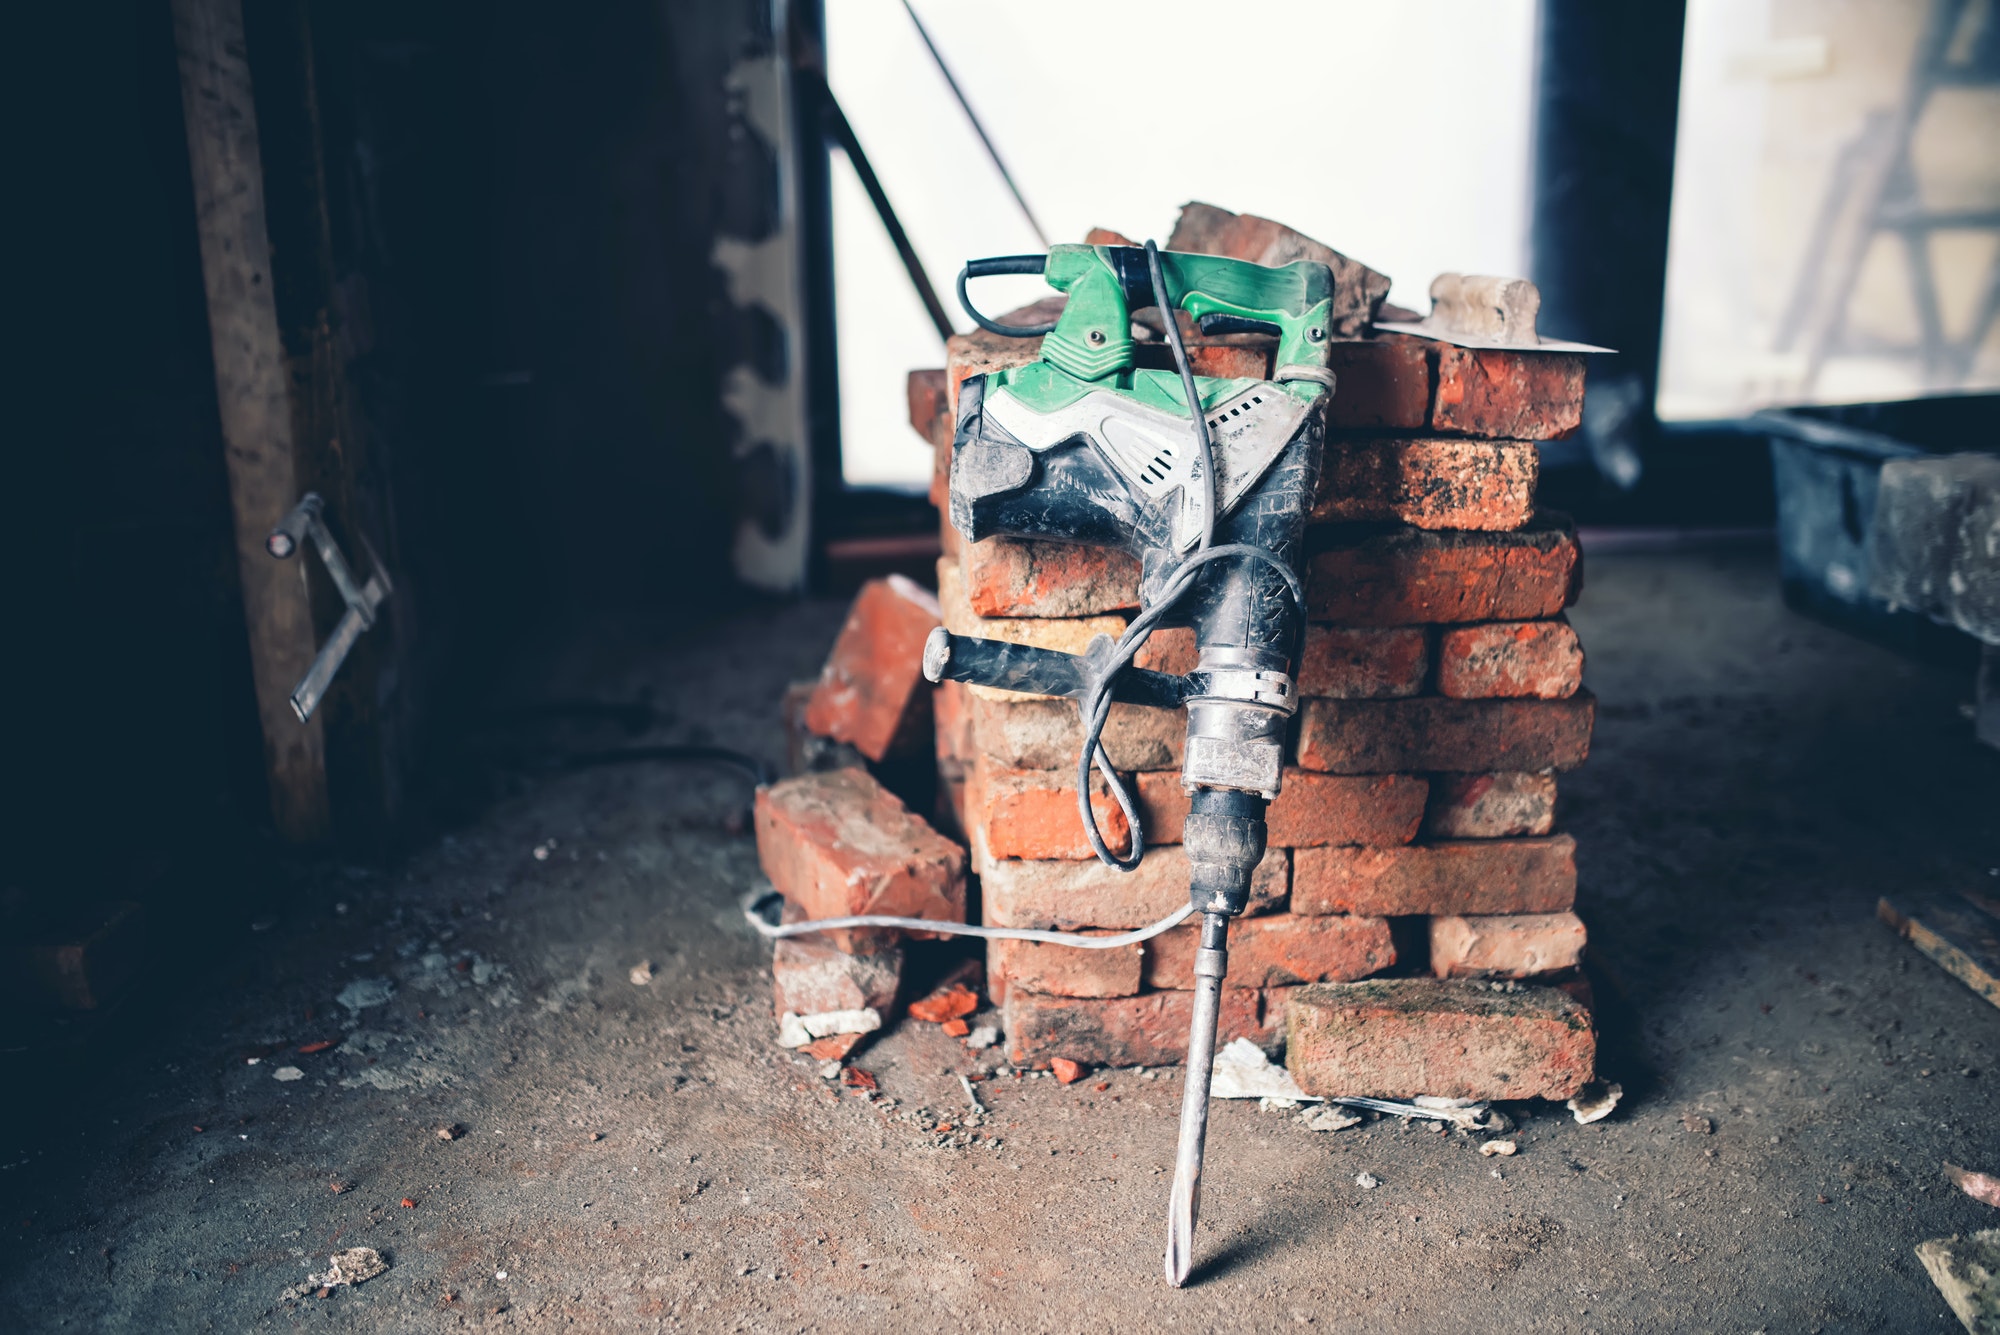 Construction tool, industrial jackhammer with demolition debris and bricks